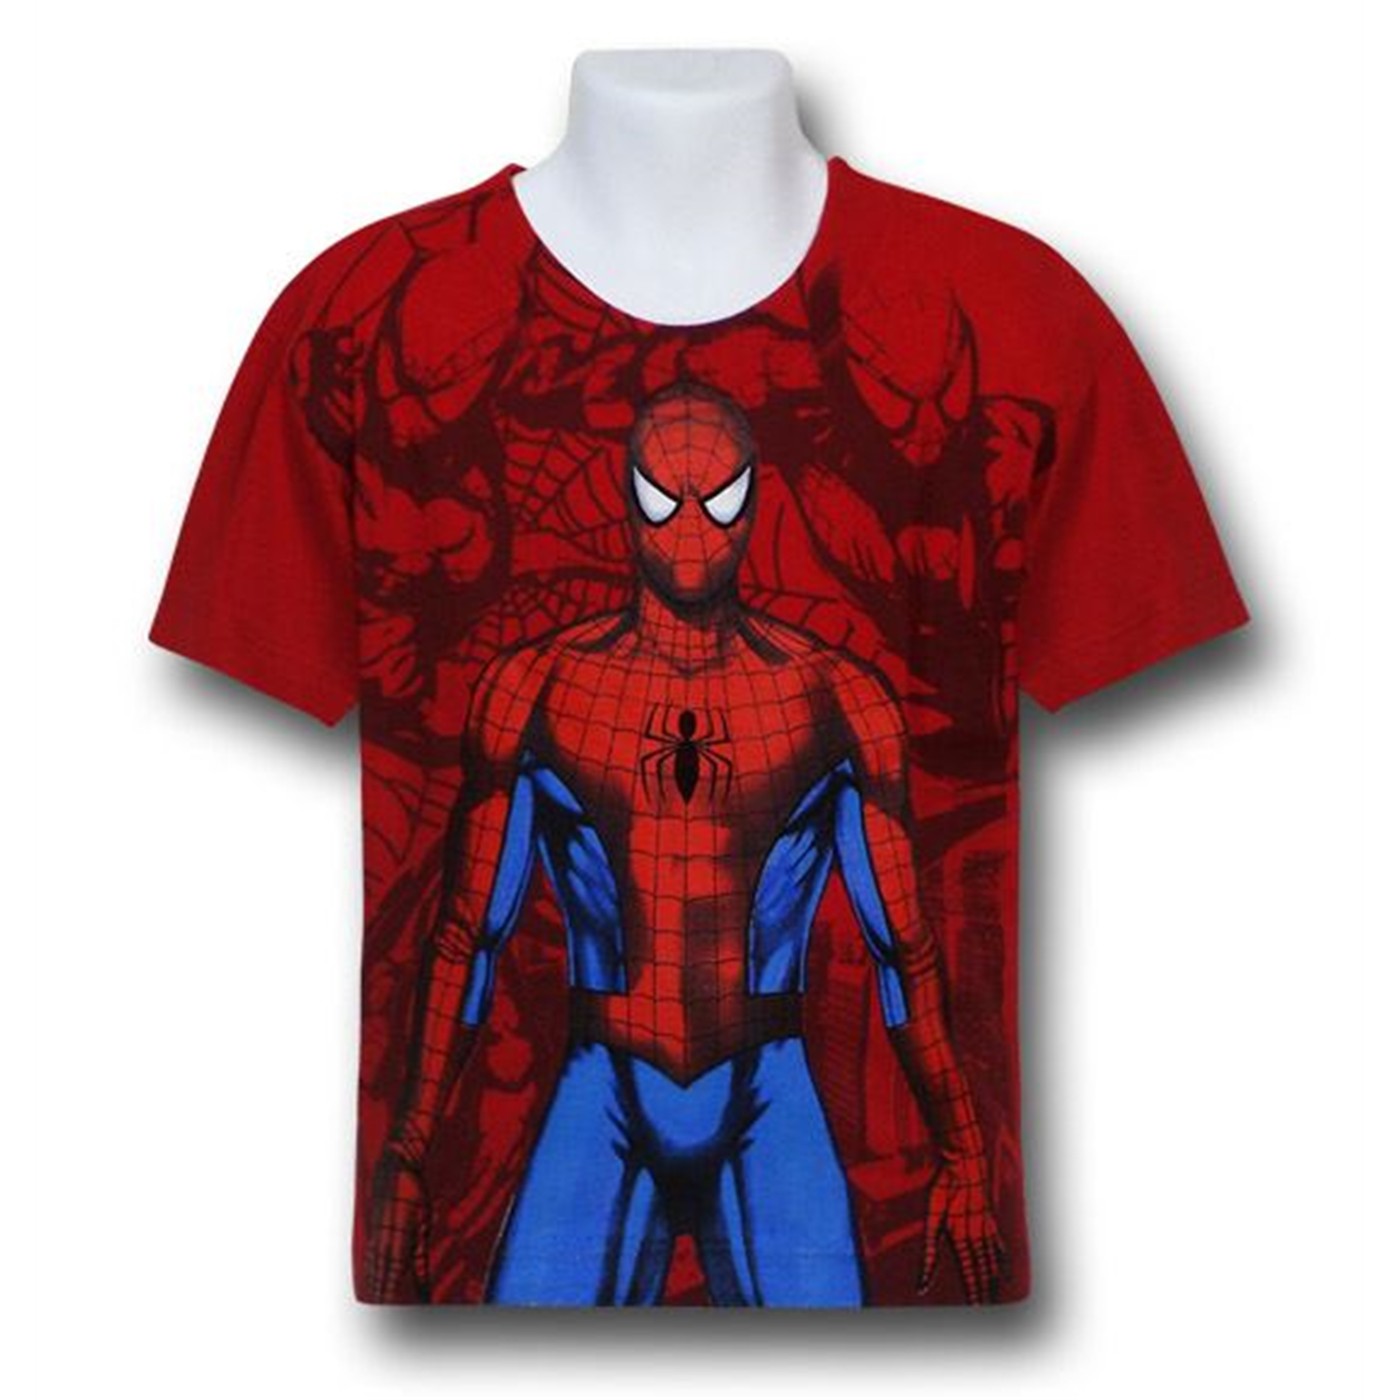 Spiderman Kids Turnaround All-Over Print T-Shirt